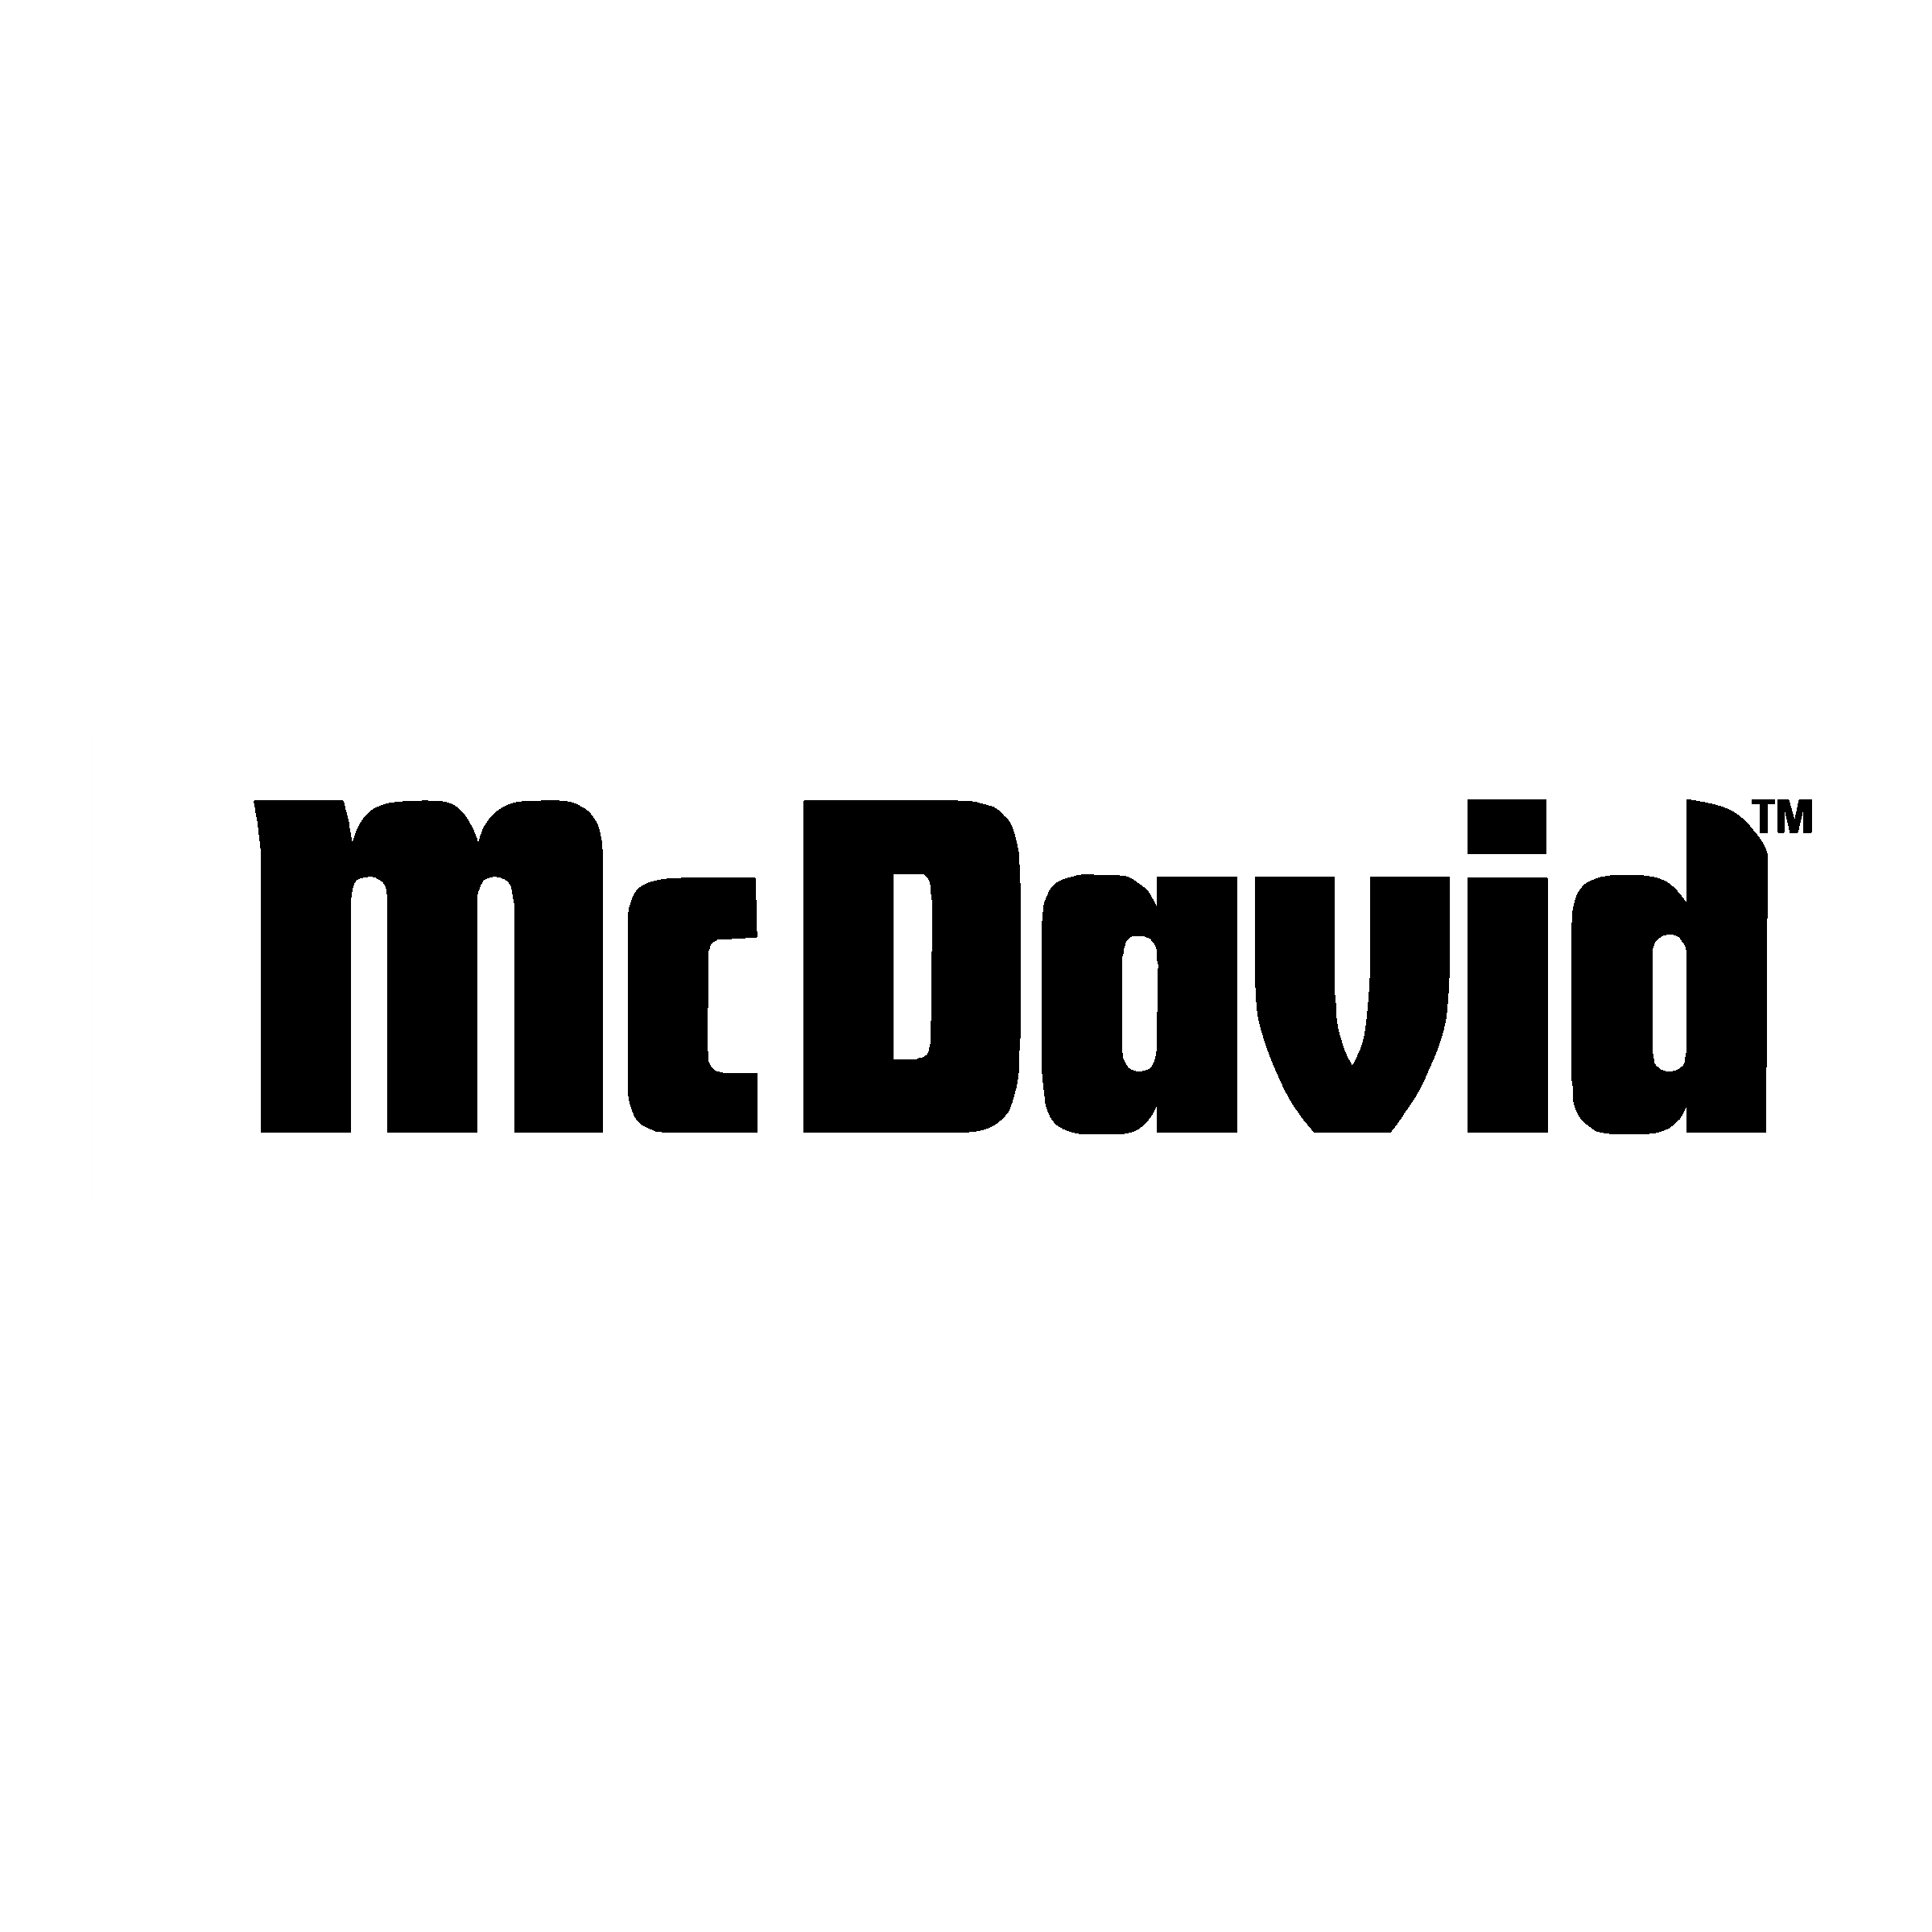 McDavid logo